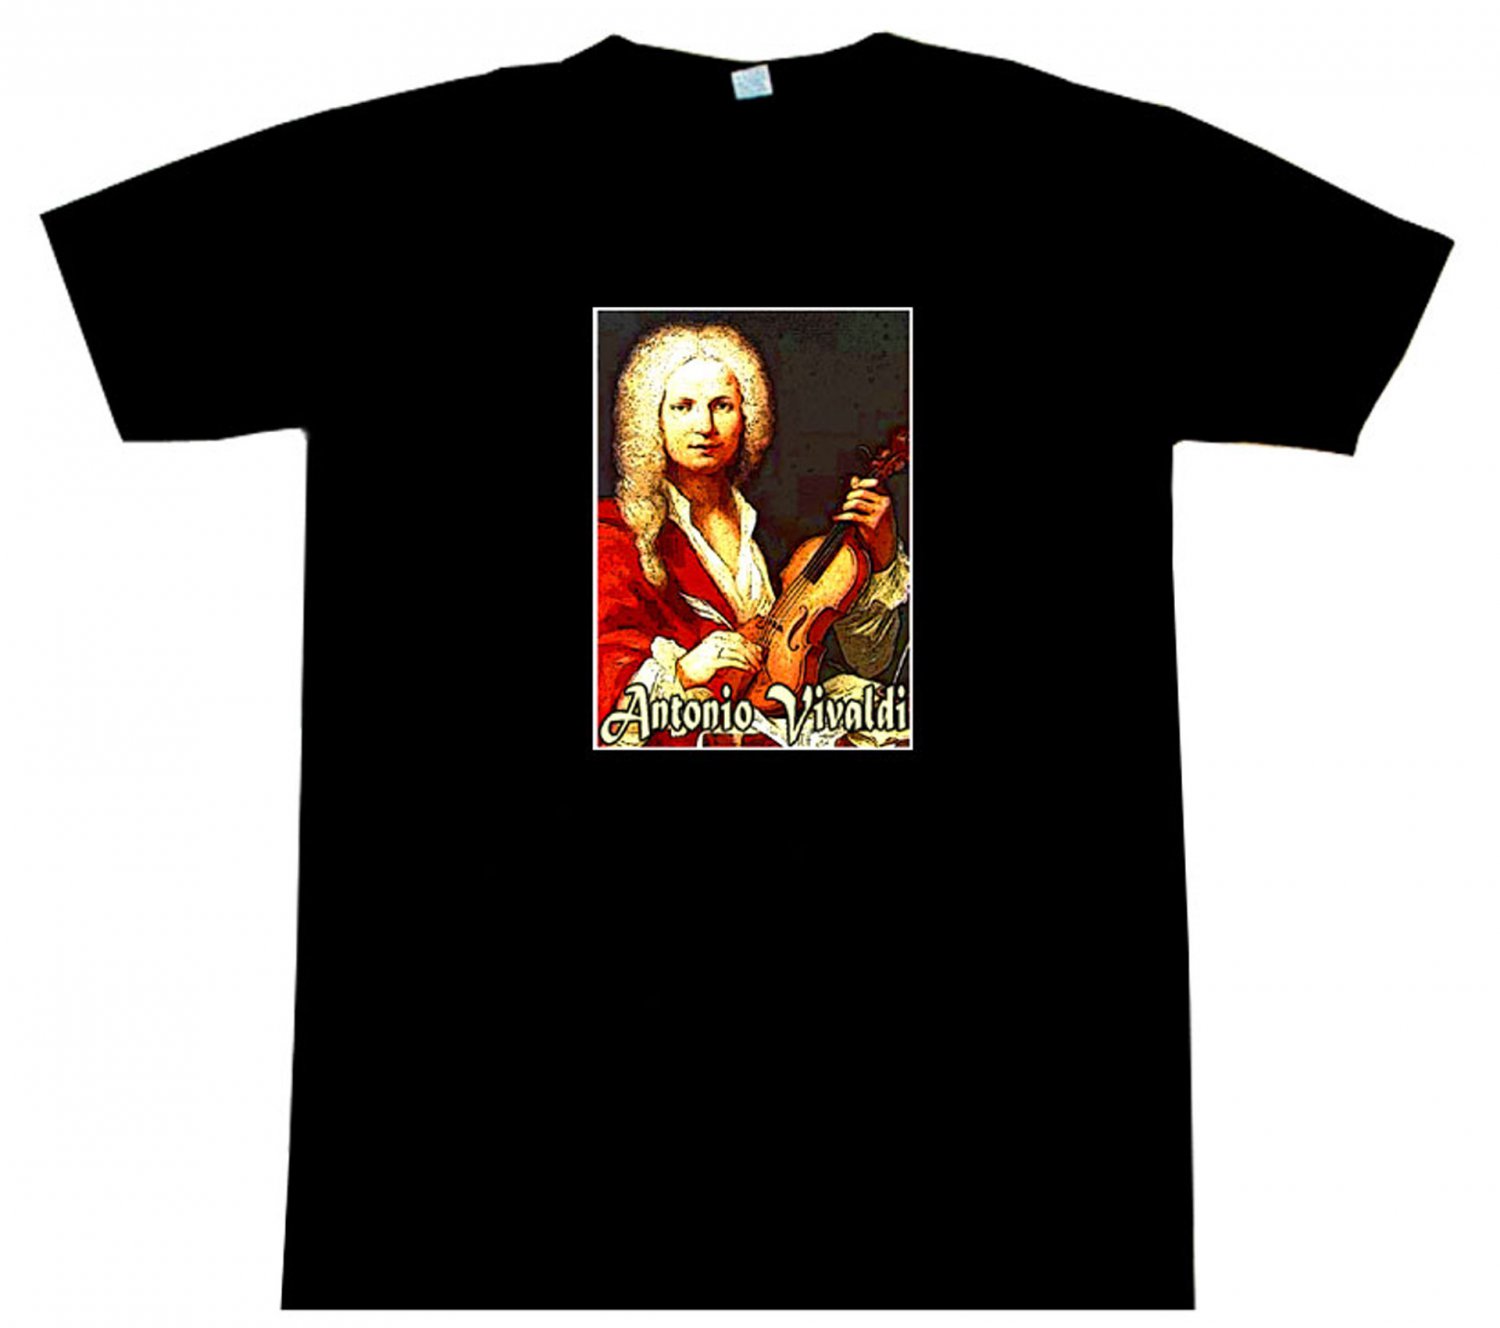 Antonio Vivaldi T-Shirt BEAUTIFUL!!